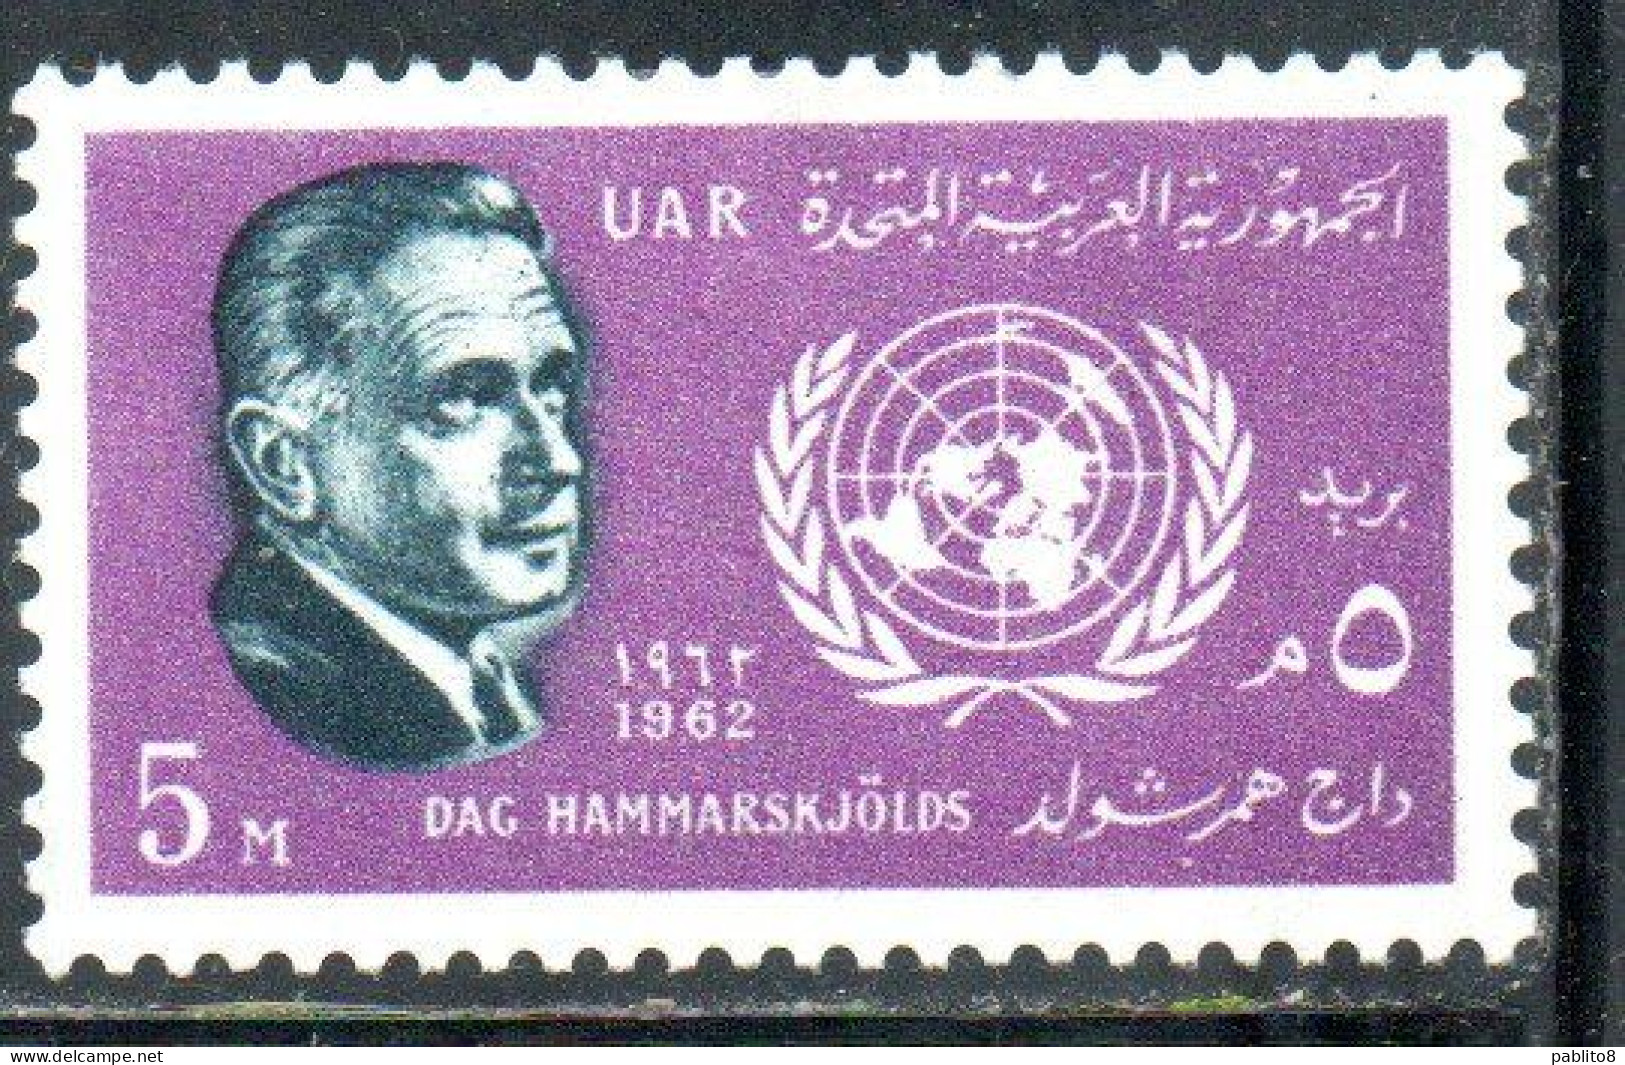 UAR EGYPT EGITTO 1962 DAG HAMMARSKJOLD SECRETARY GENERAL OF THE UN ONU 5m MH - Unused Stamps